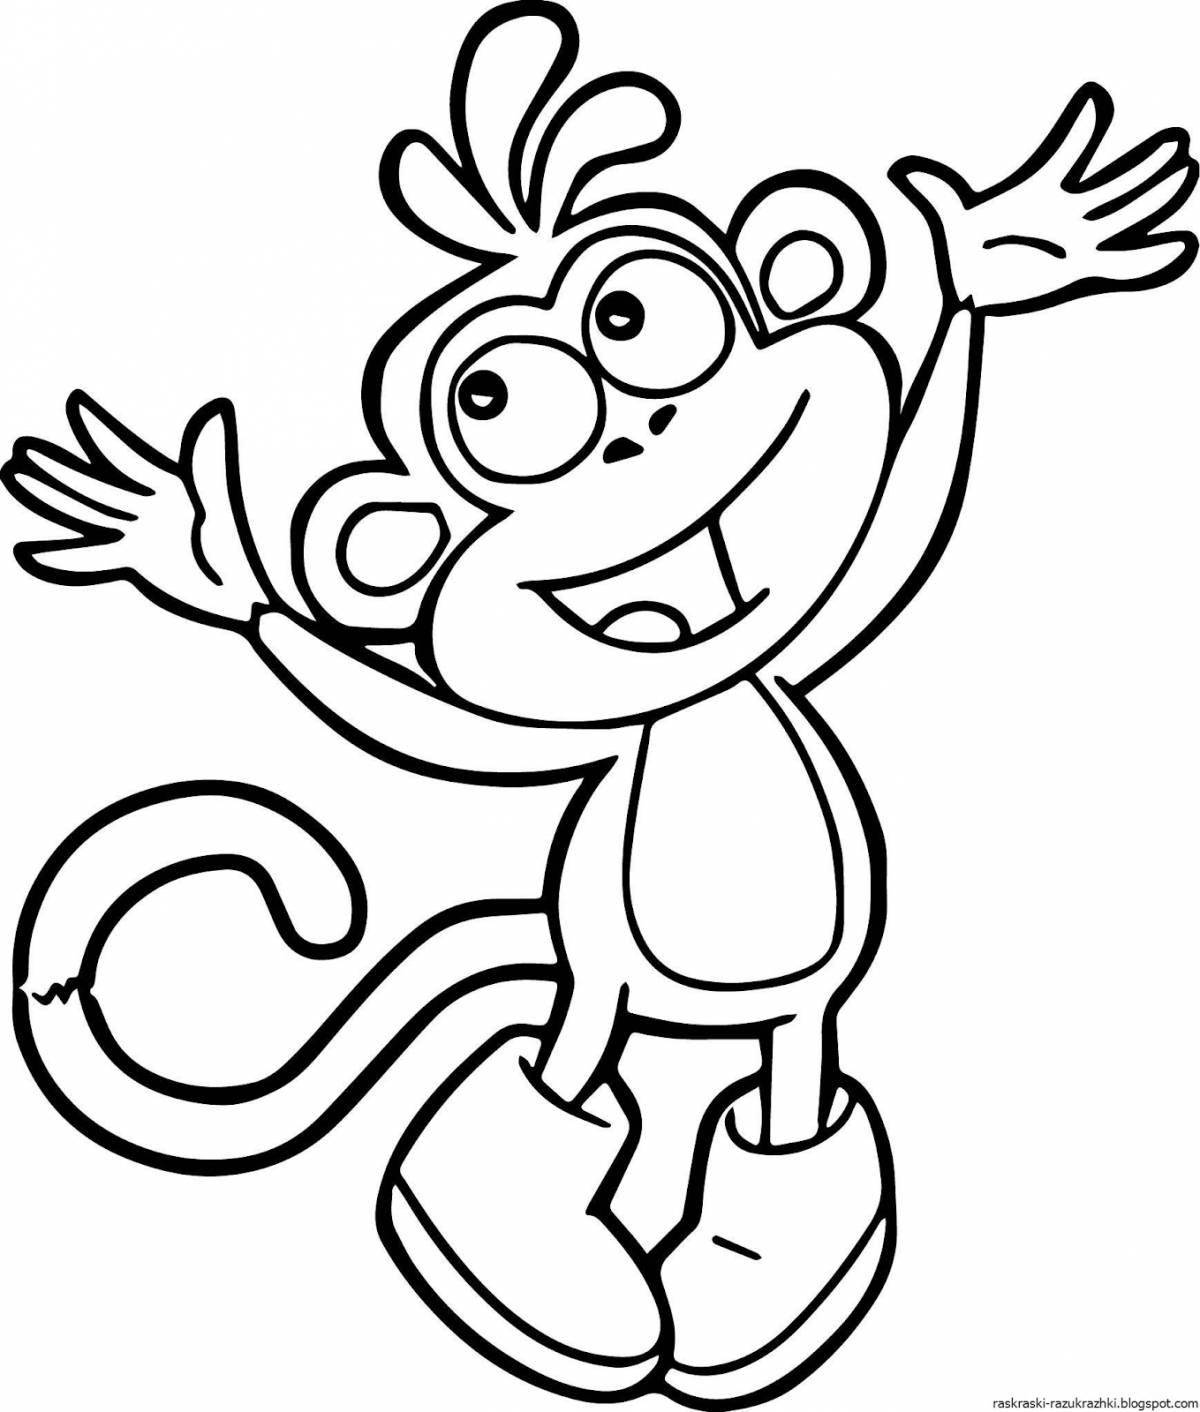 Joyful monkey coloring book for kids